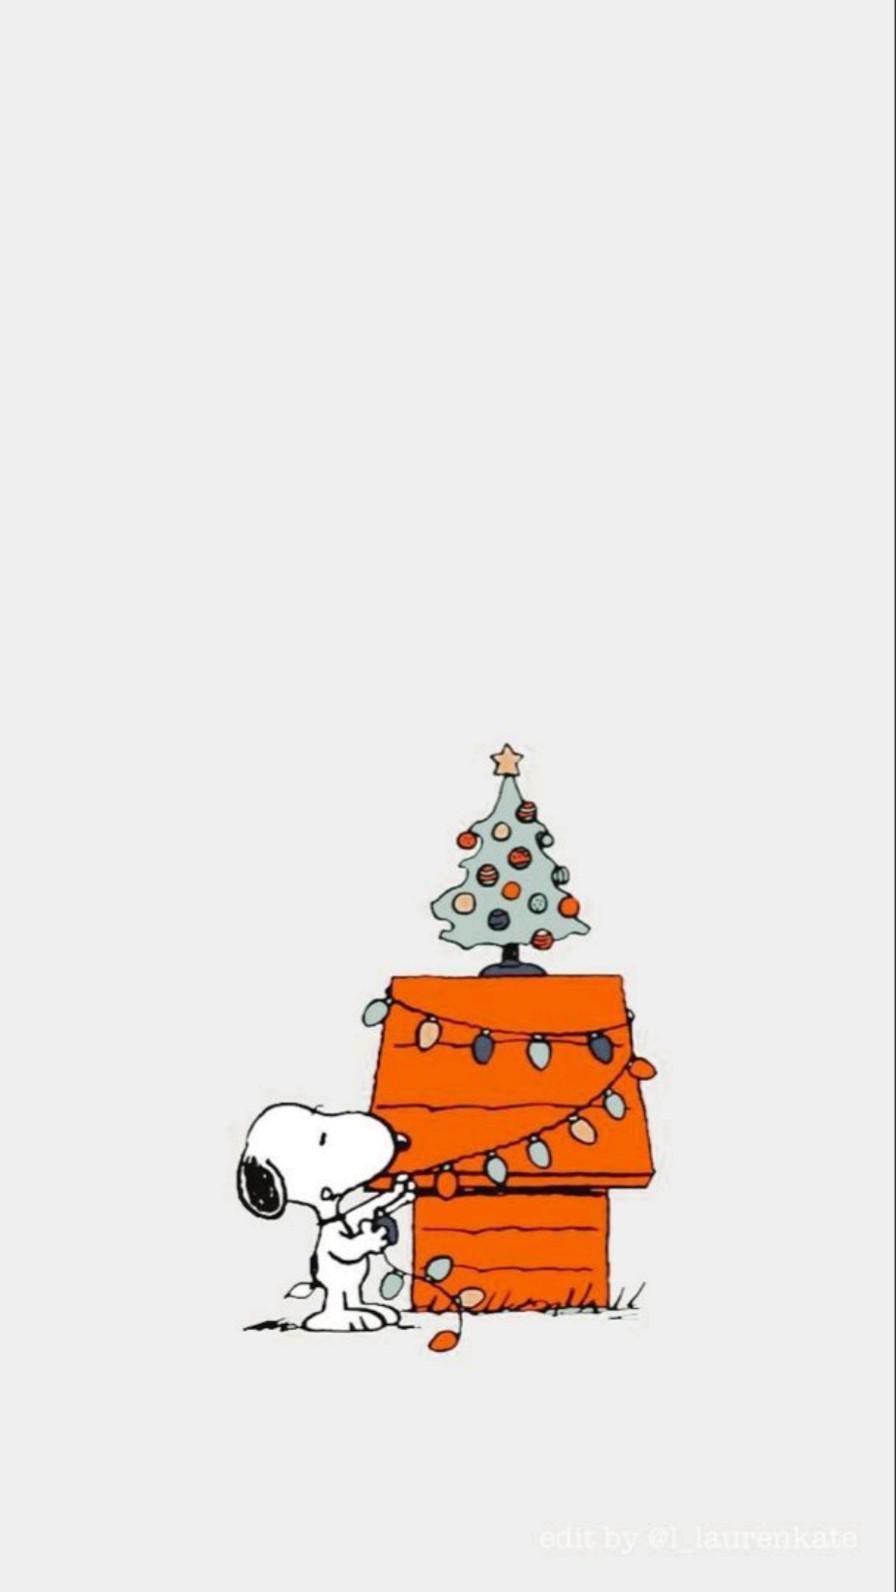 Snoopy christmas tree on a wood house - Charlie Brown, Christmas, cute Christmas